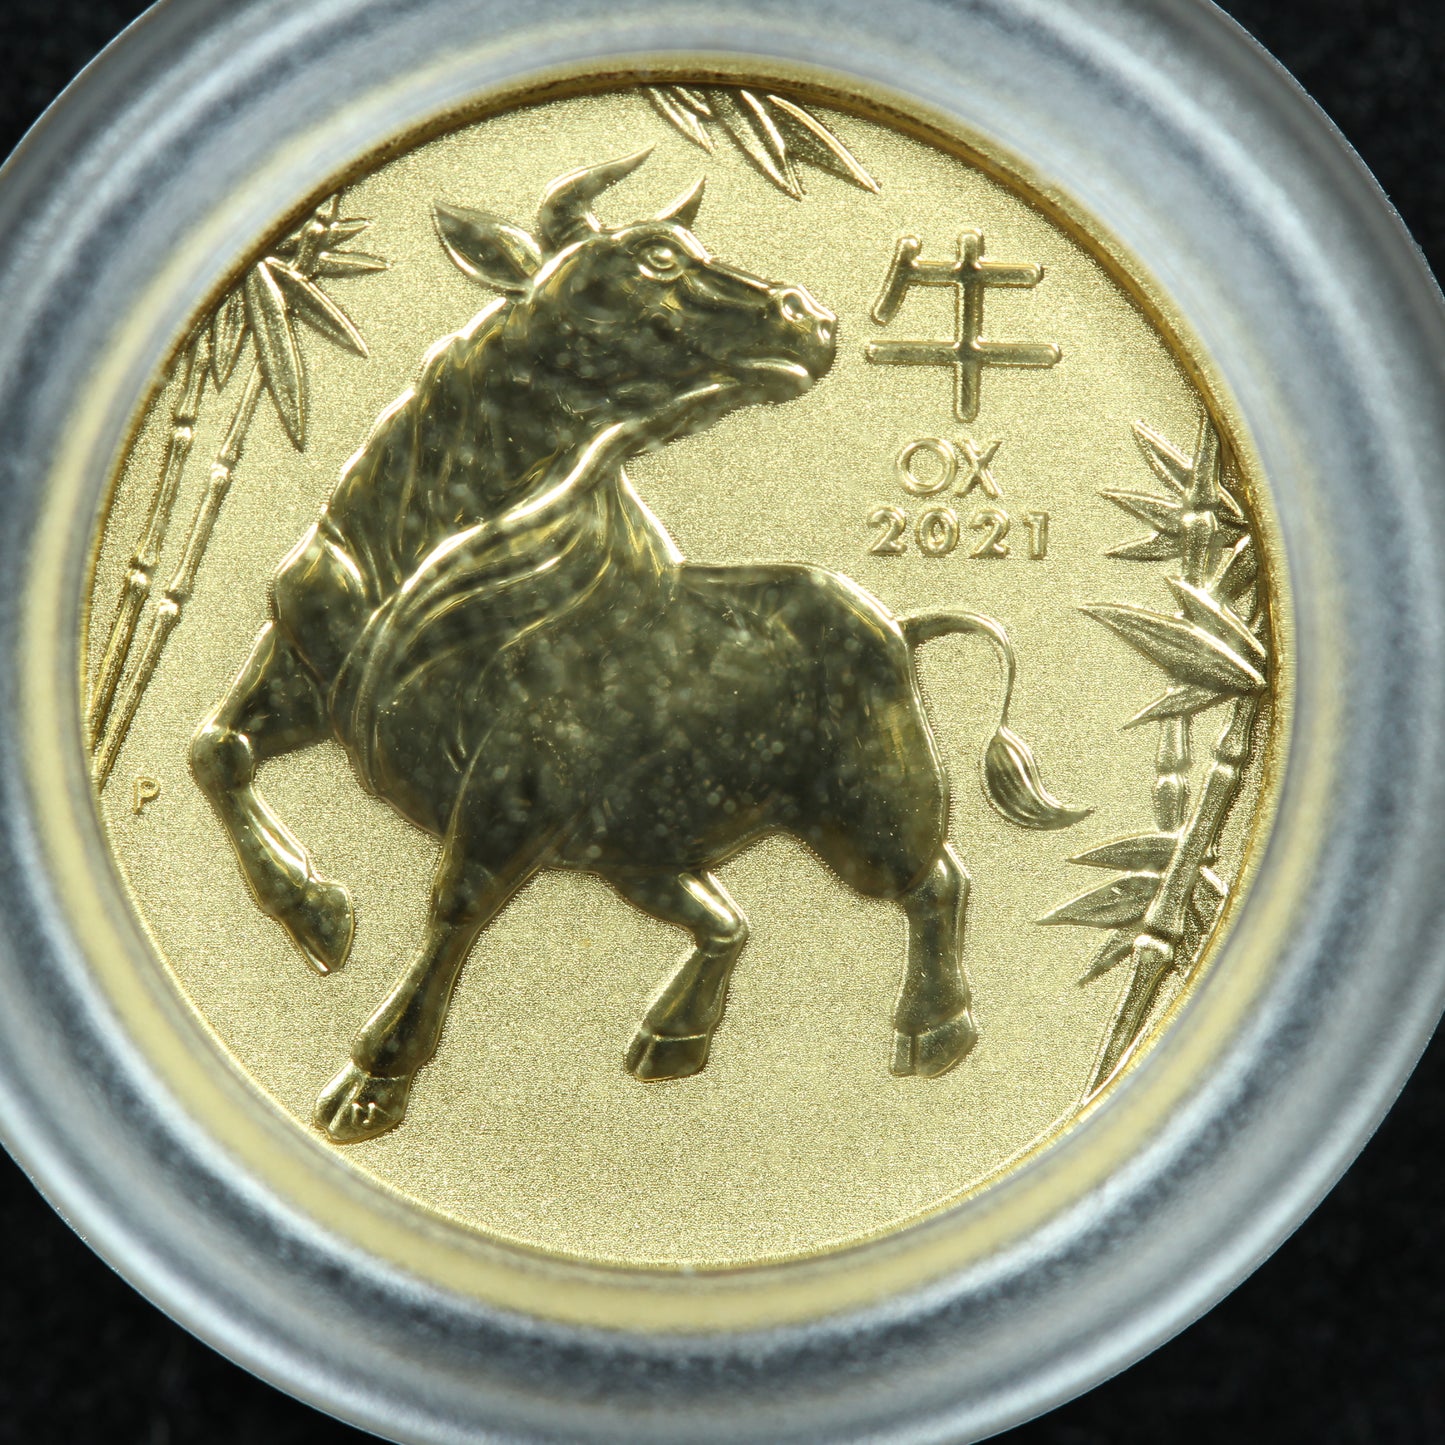 2021 Perth Australia Year of the Ox 1/20 oz .9999 Fine Gold Coin w/ Capsule